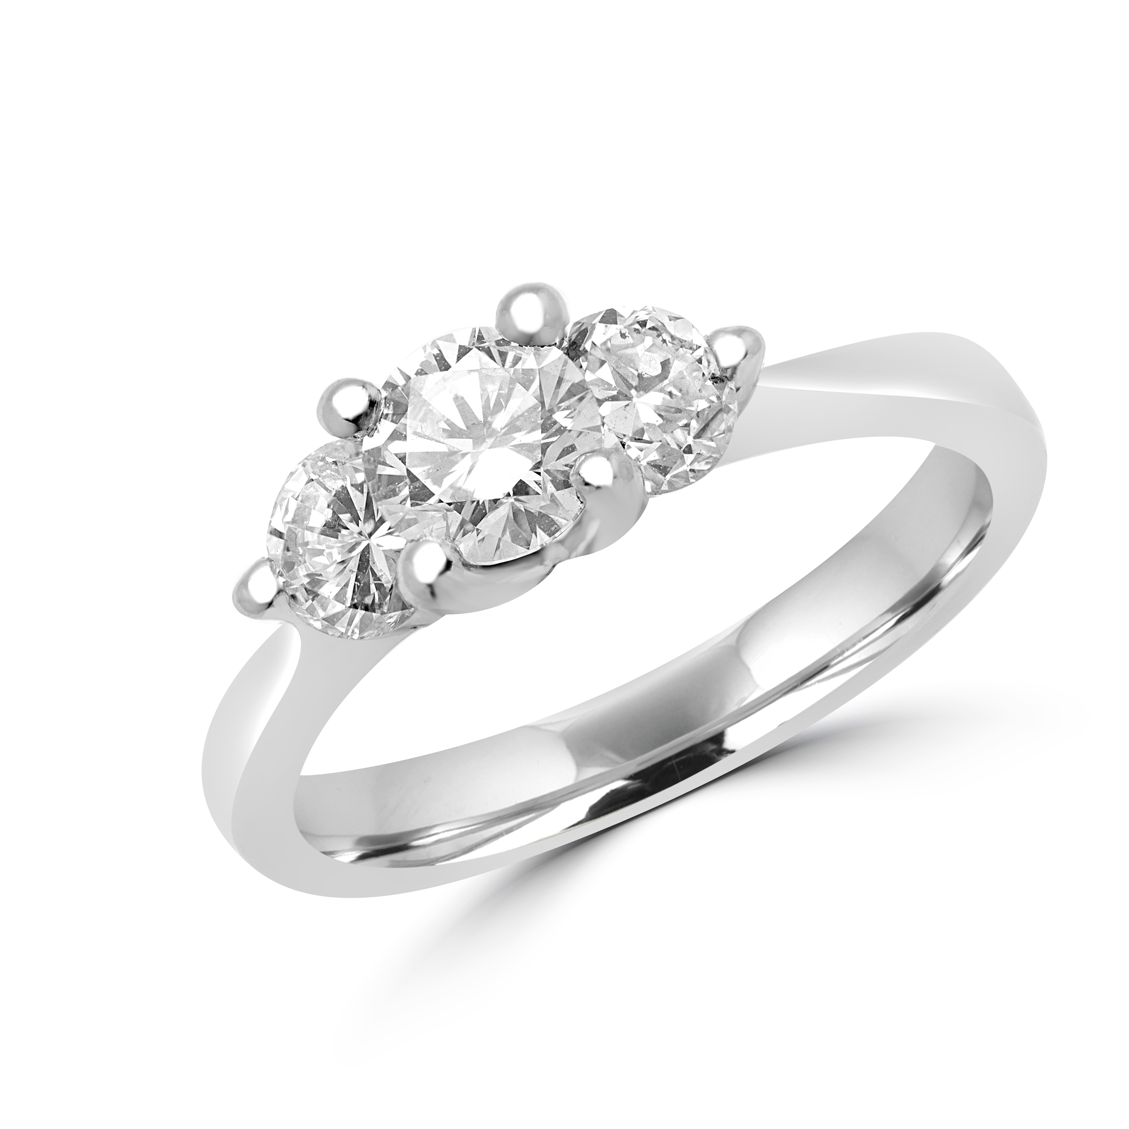 Dream lab grown diamond ring 1.08 (ctw) in 14k white gold